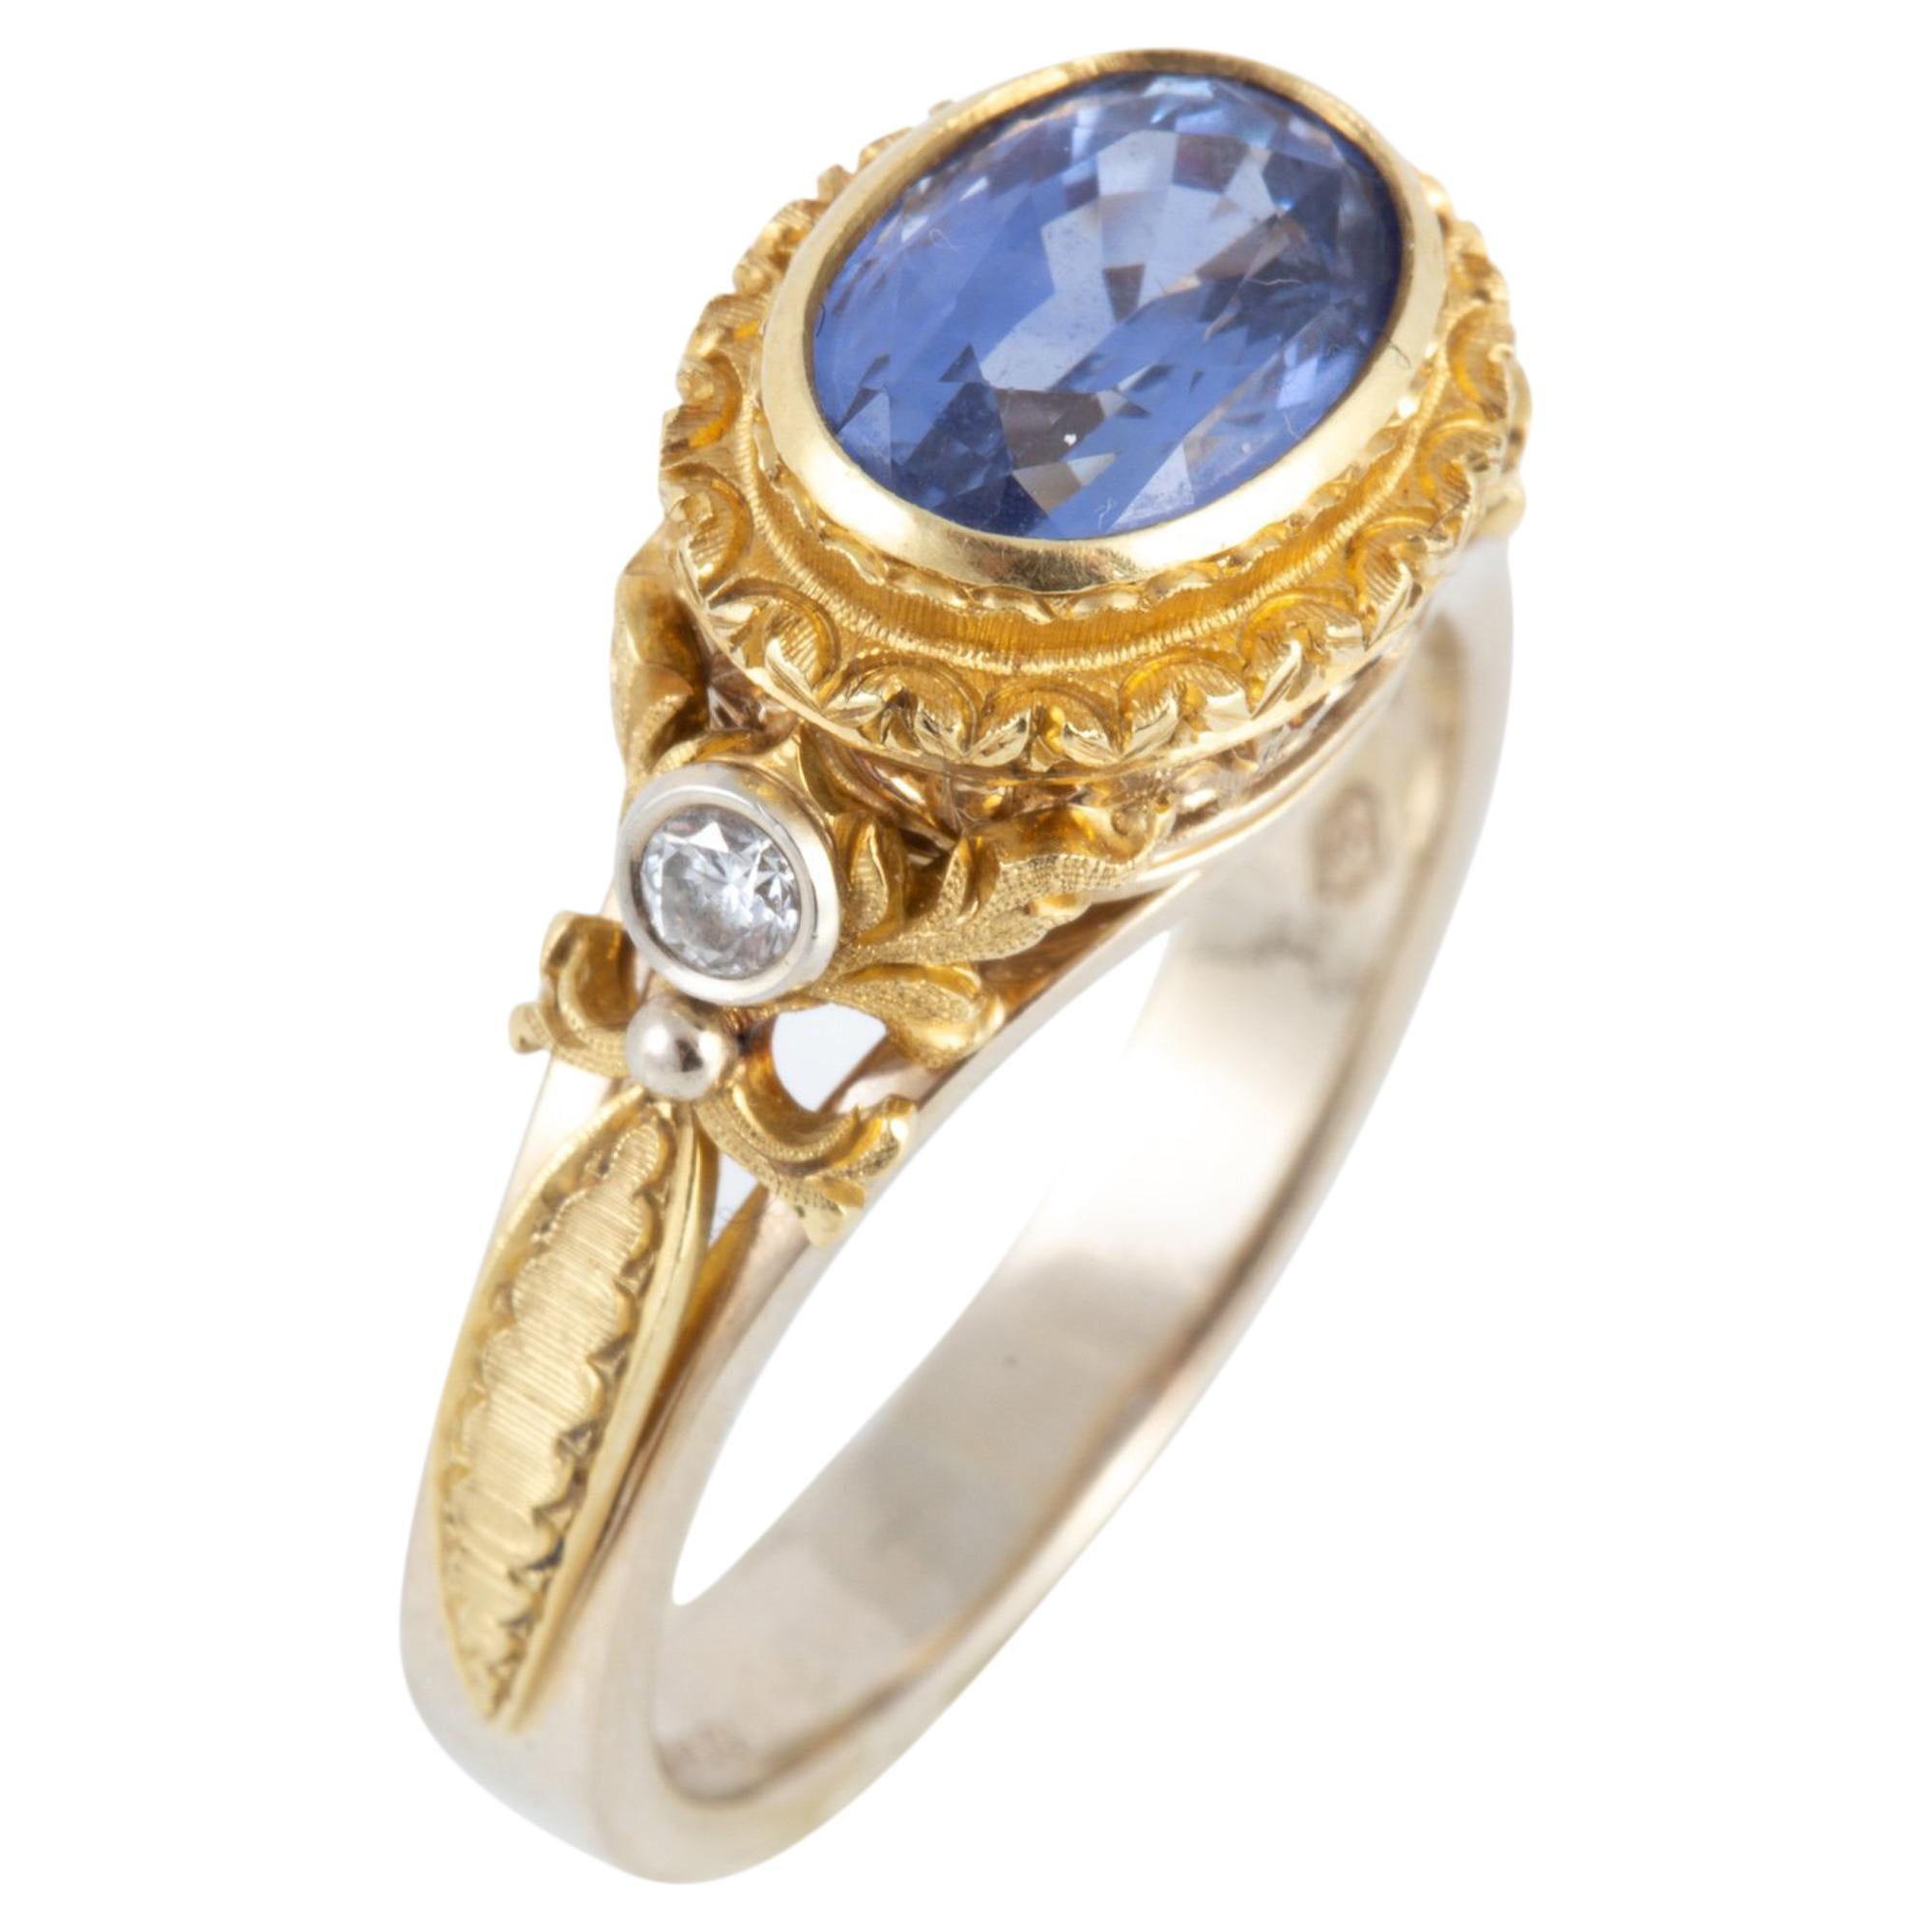 Hand Engraved Ceylon Blue Sapphire and Diamond Ring Set in 18 Karat Gold